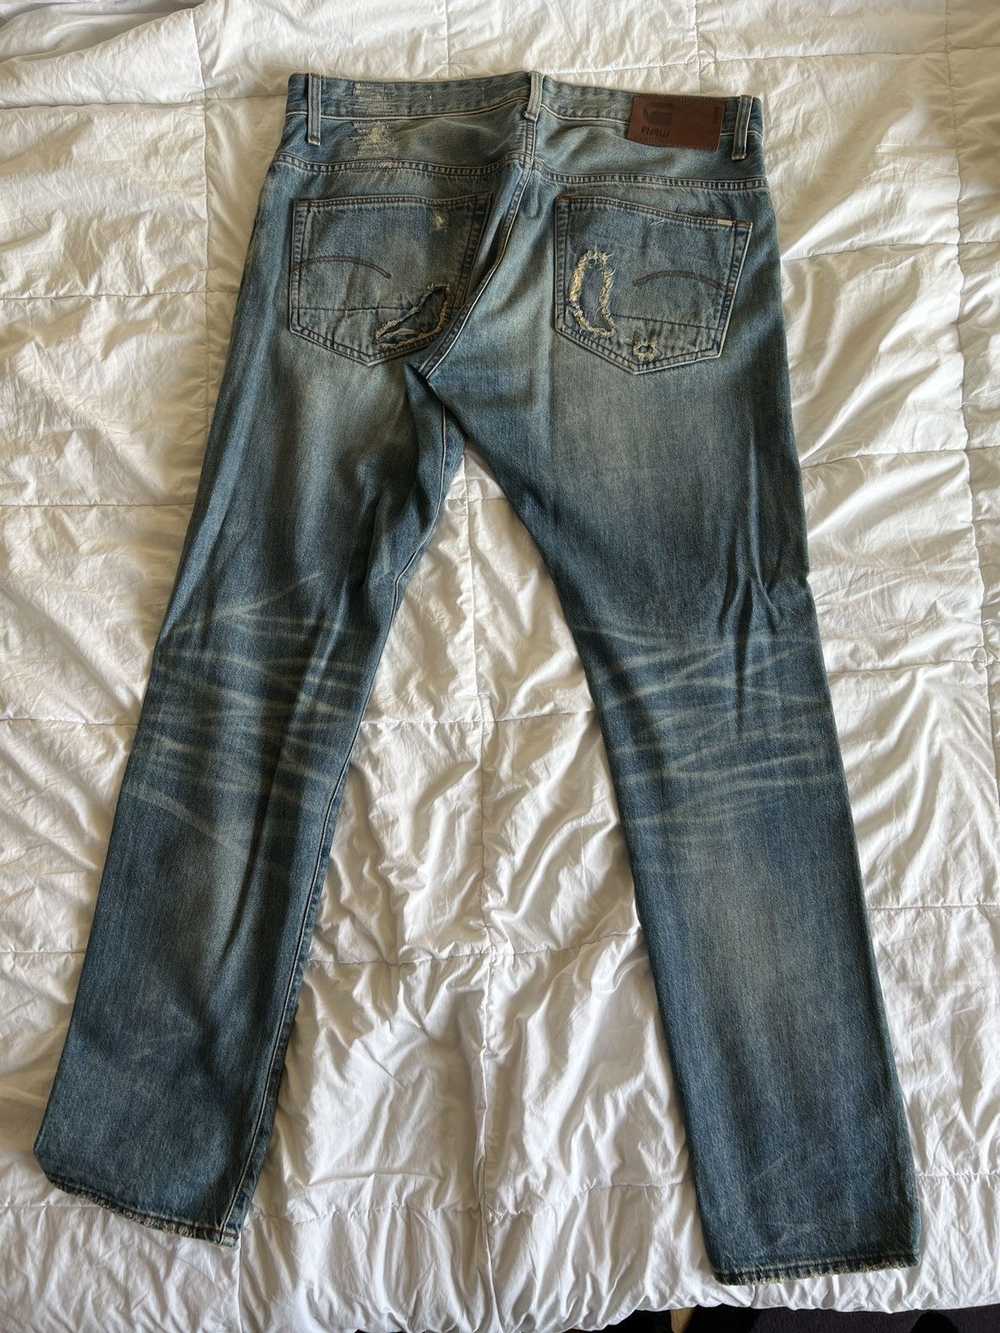 Gstar g star slim denim distressed jeans - image 5